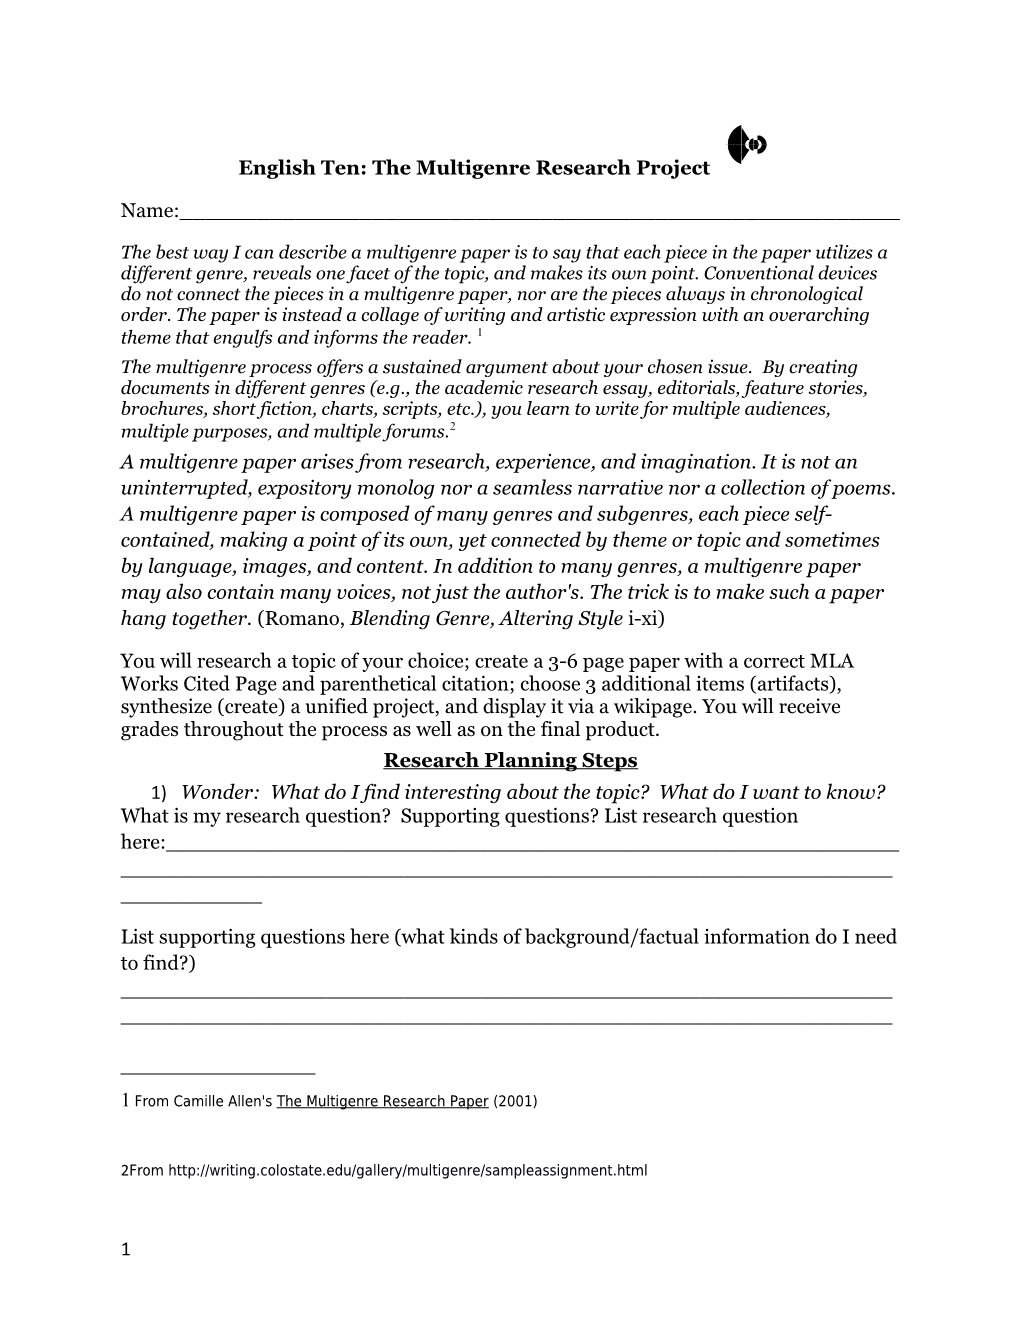 English Ten: the Multigenre Research Project